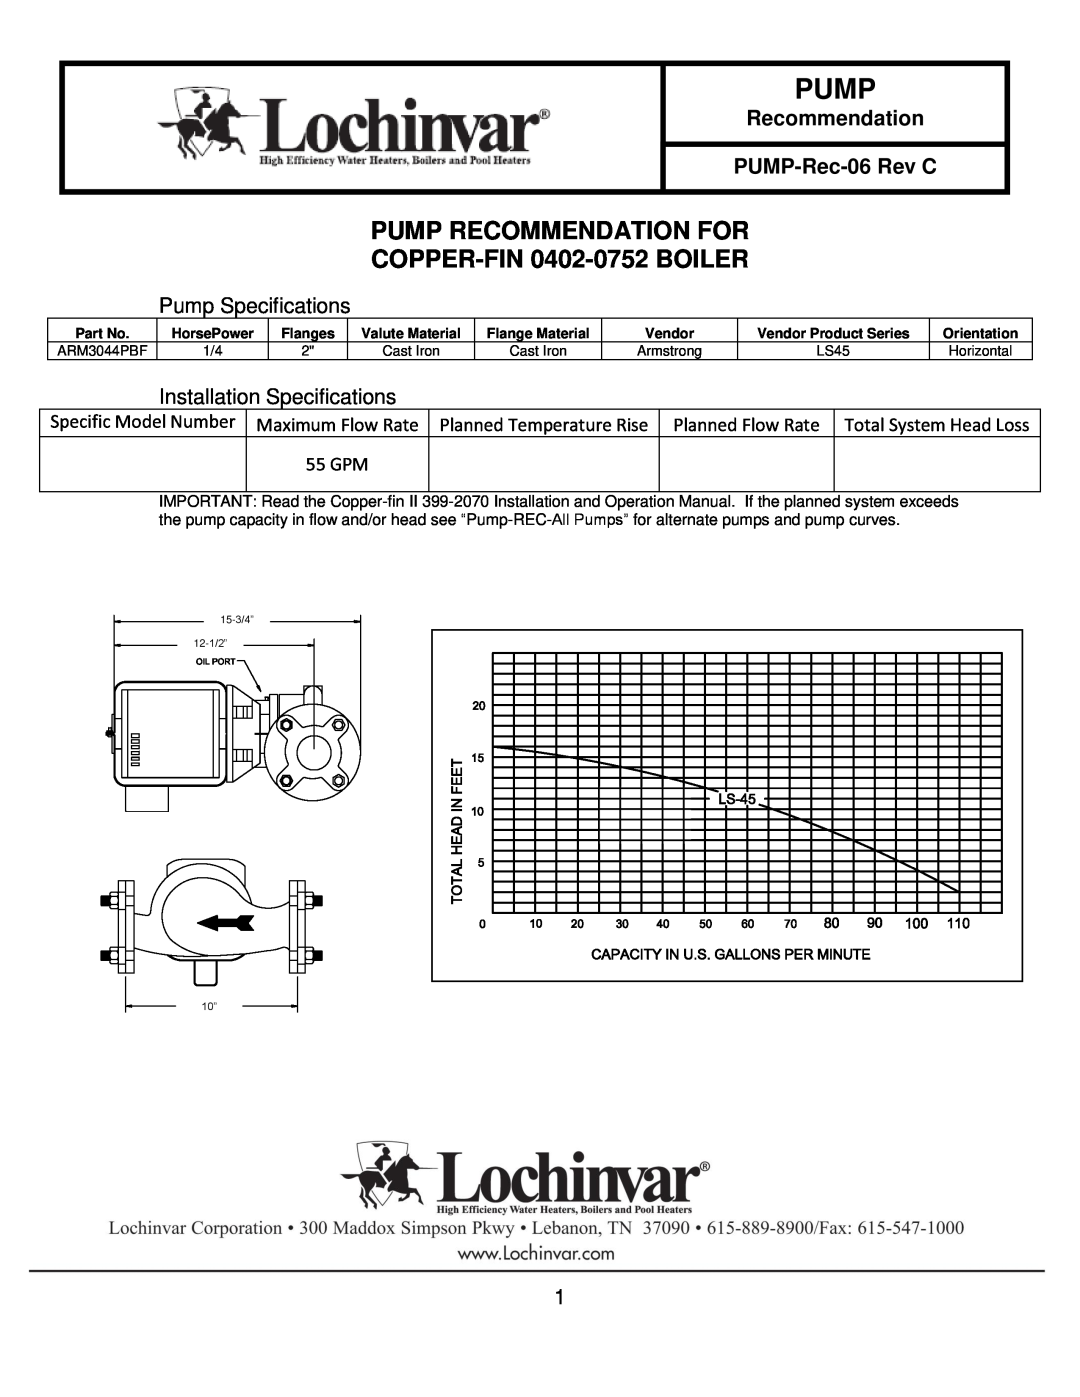 Lochinvar specifications Pump, PUMP RECOMMENDATION FOR COPPER-FIN 0402-0752 BOILER, Recommendation PUMP-Rec-06 Rev C 